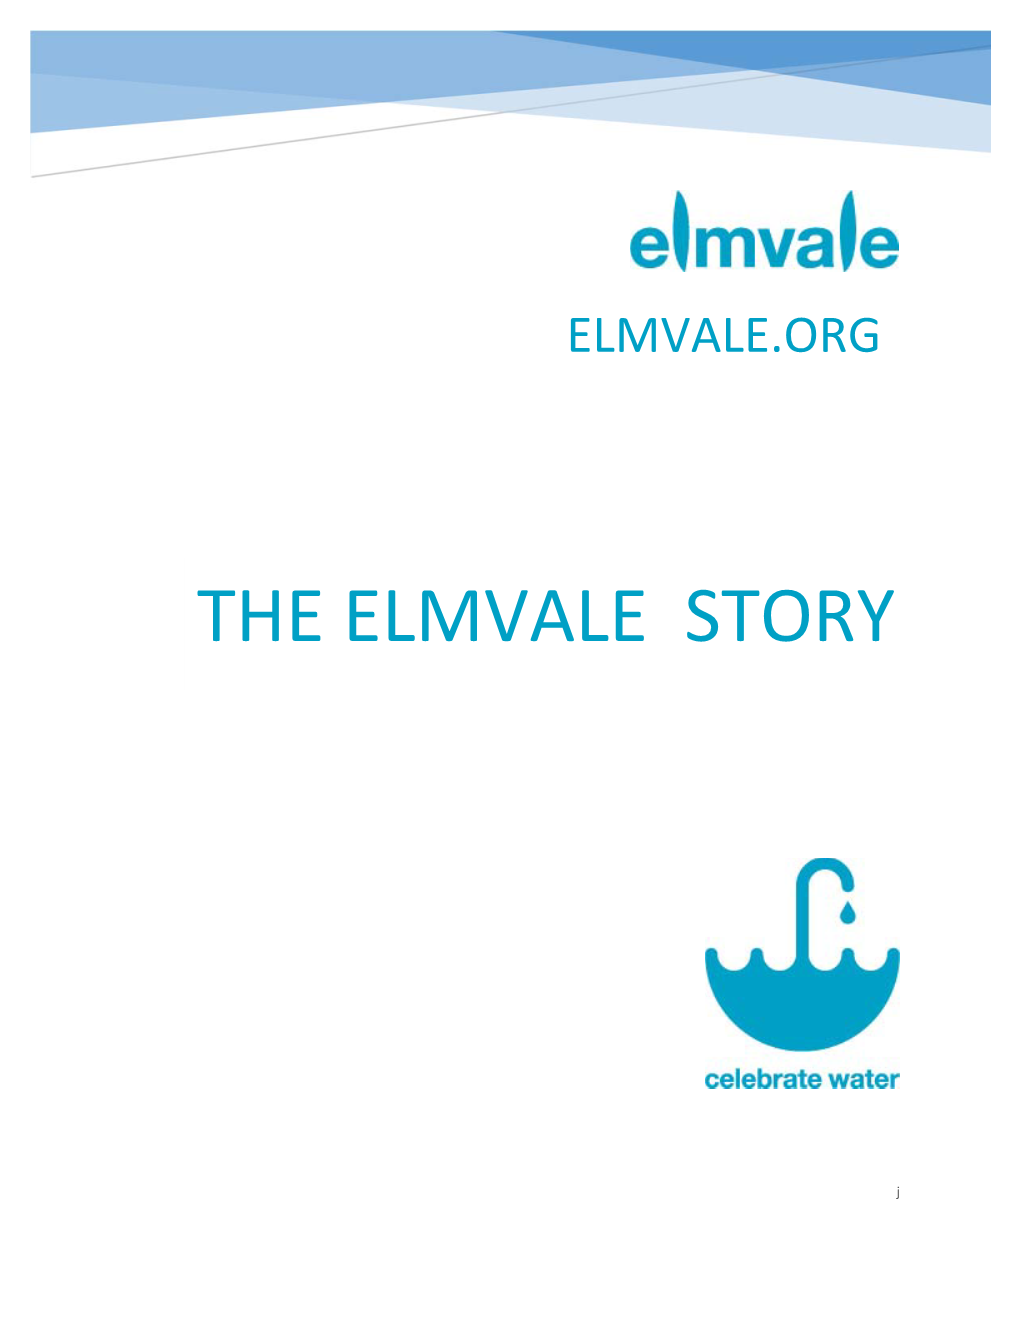 The Elmvale Story